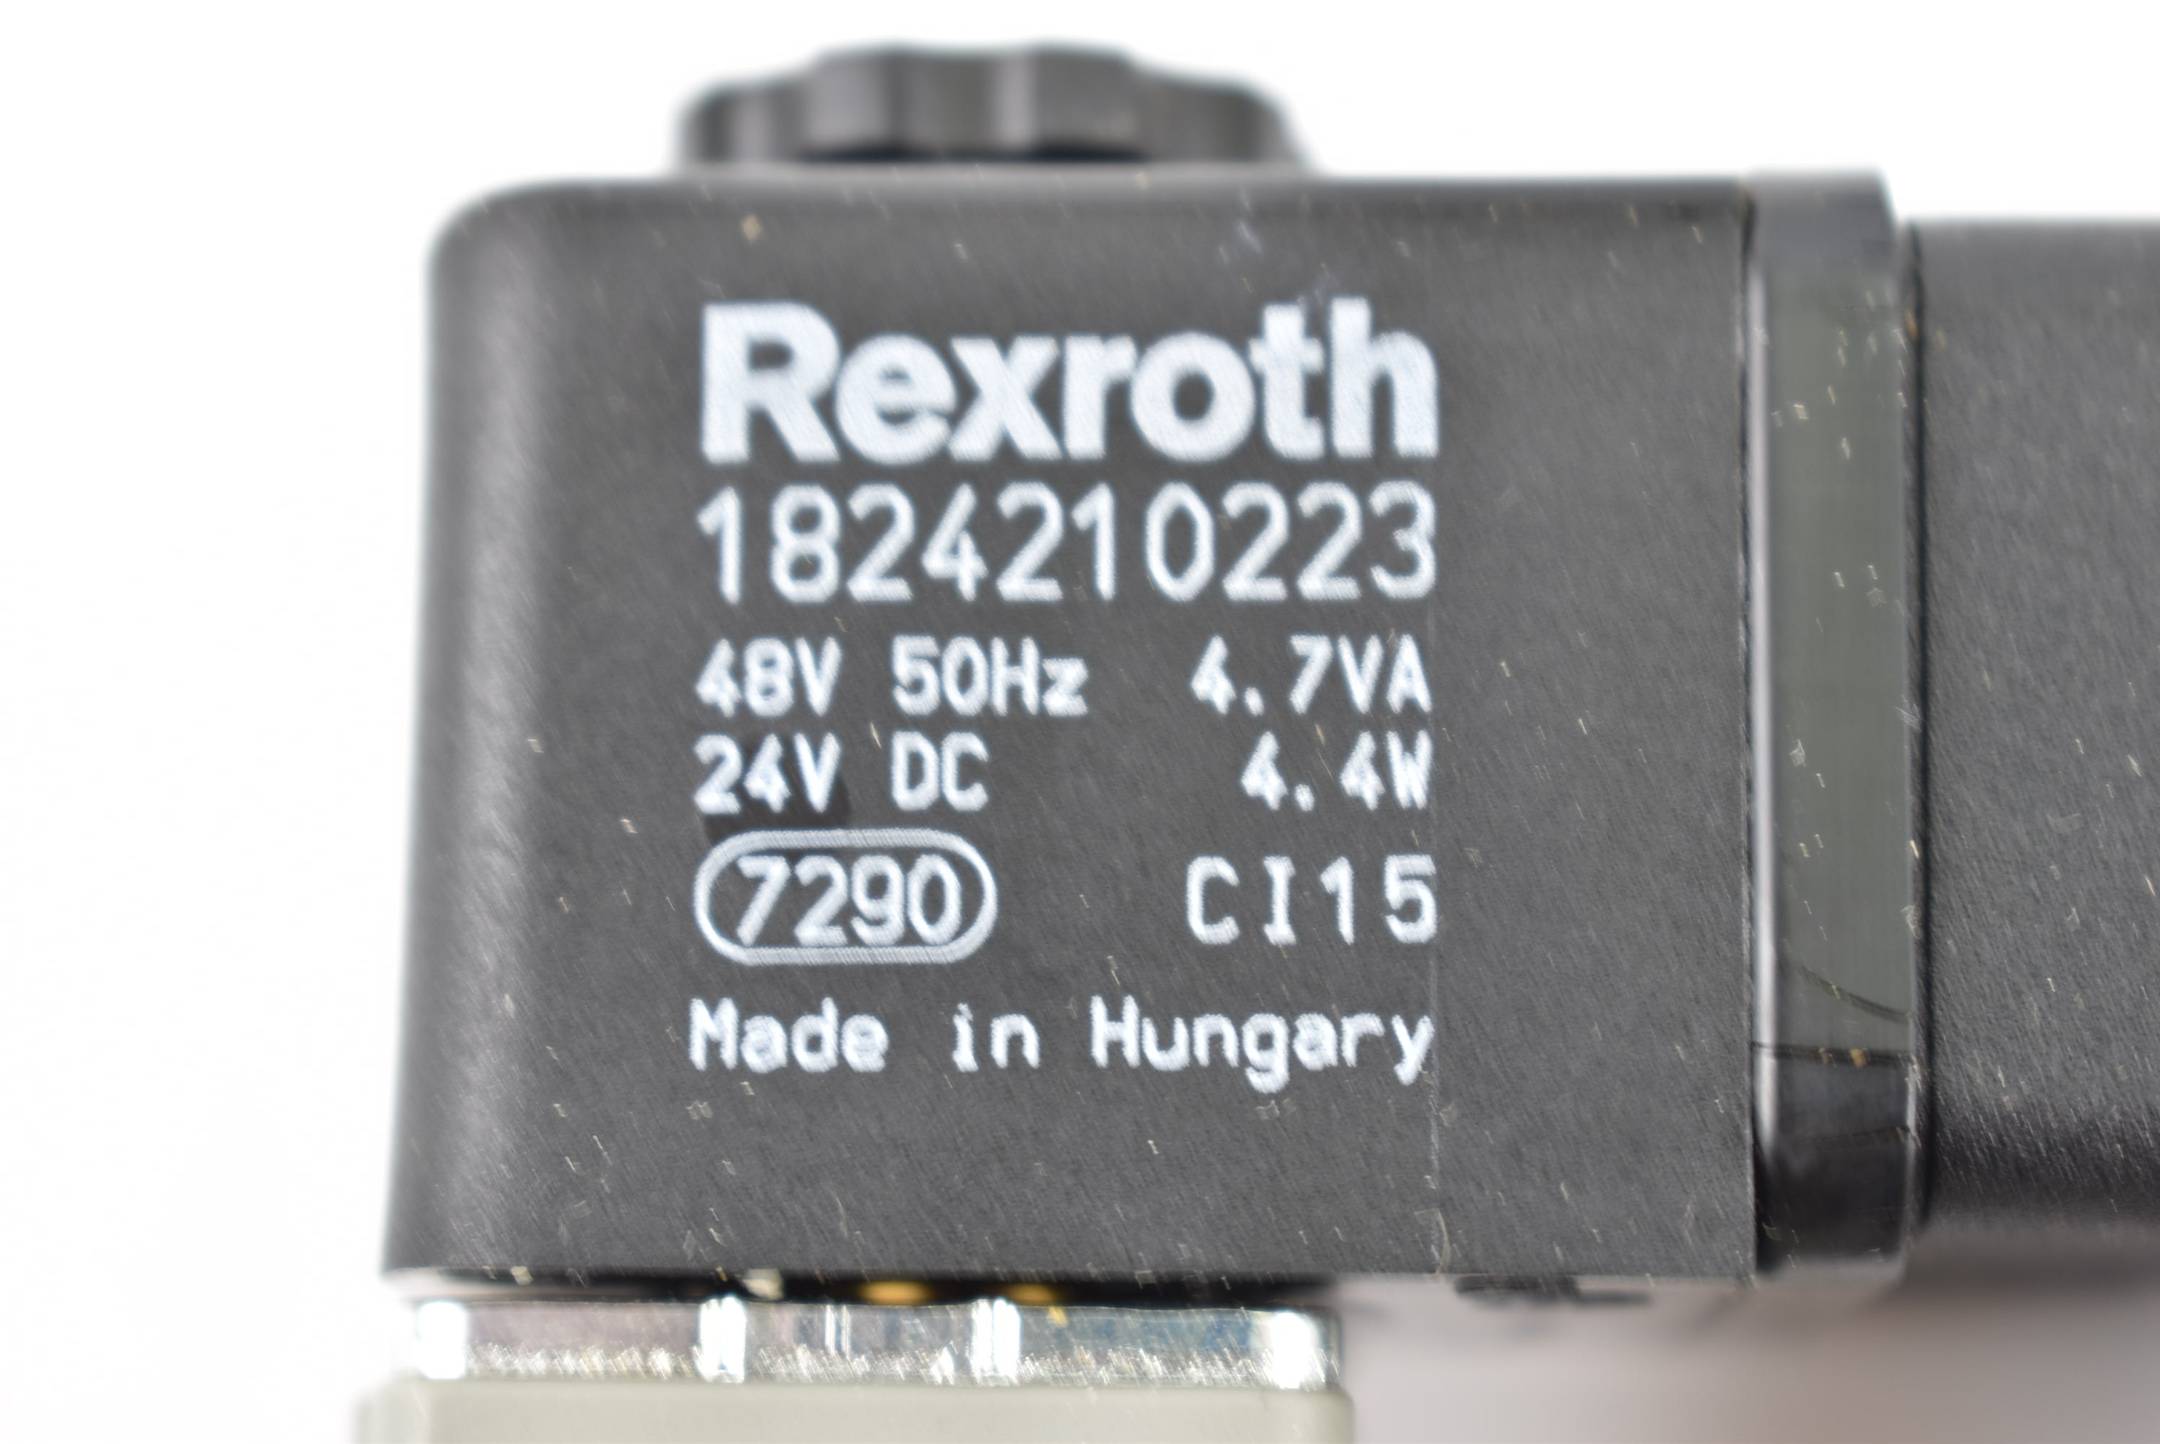 Rexroth 10bar 143PSI R976500616 + Magnetspule 1824210223